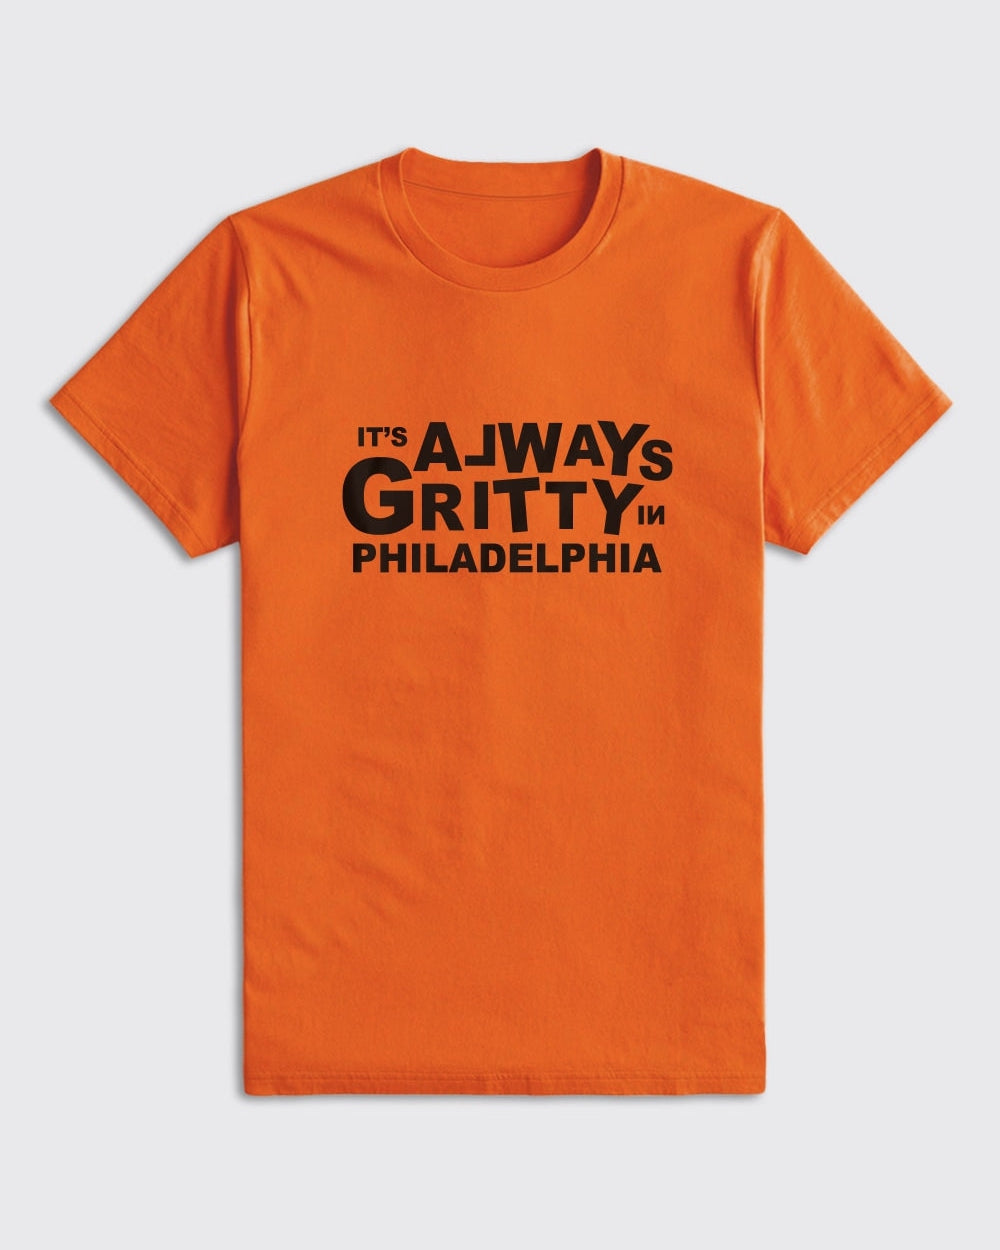 Philadelphia Flyers-It's Always Gritty In Philadelphia Shirt-Orange-Philly Sports Shirts